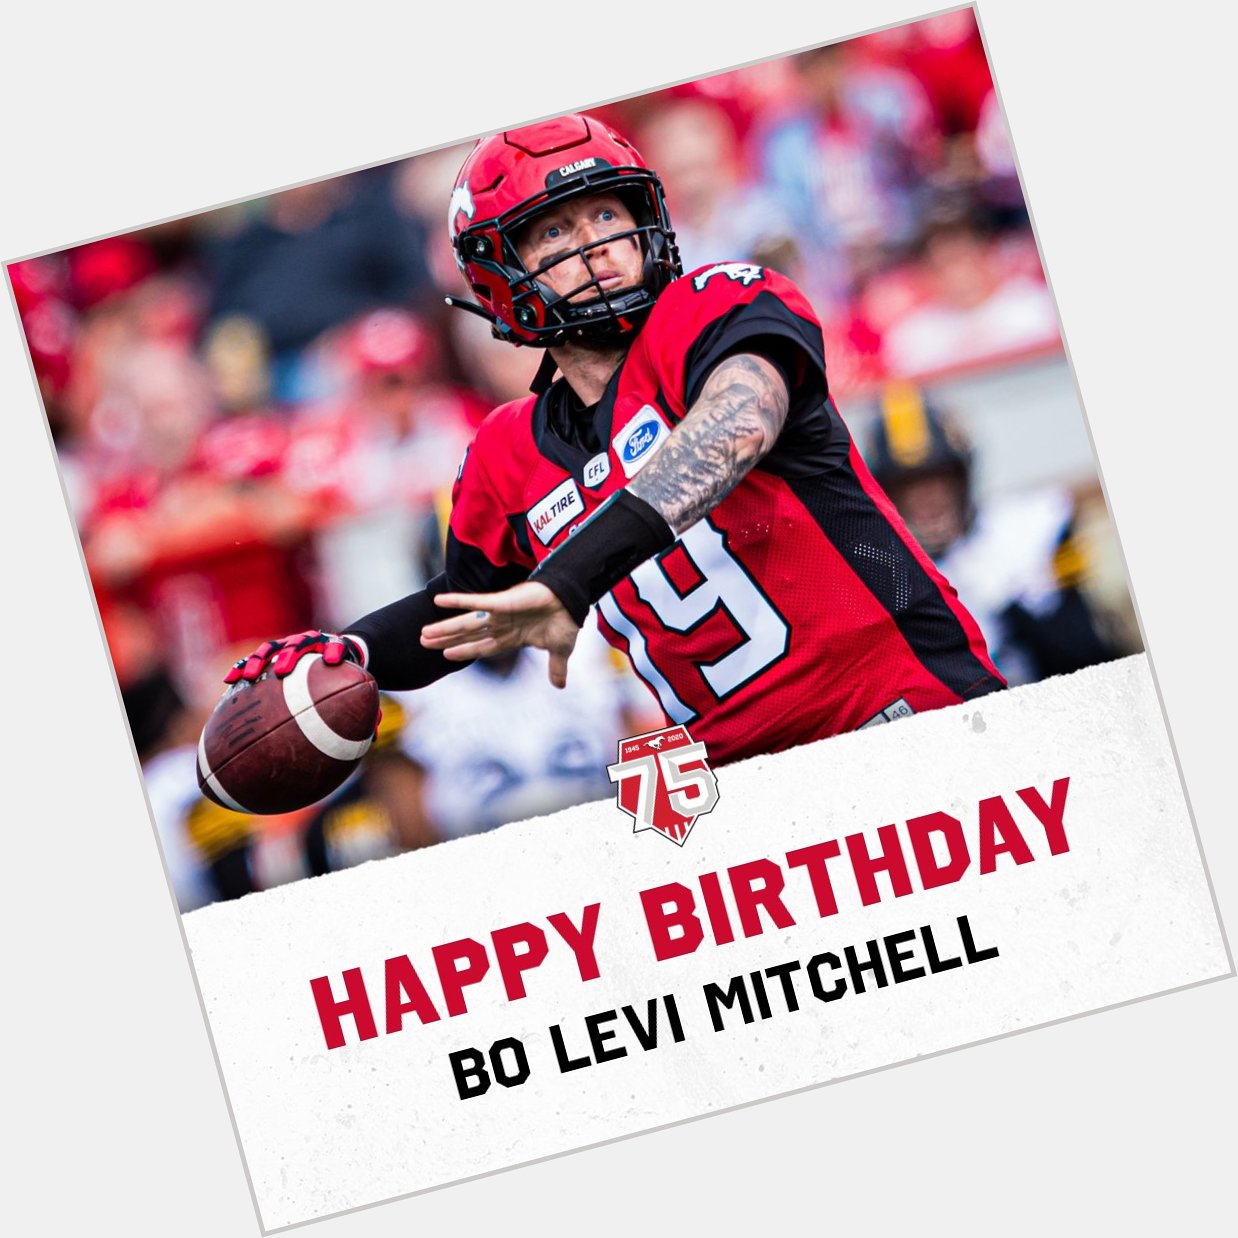 To wish Bo Levi Mitchell a Happy Birthday! 